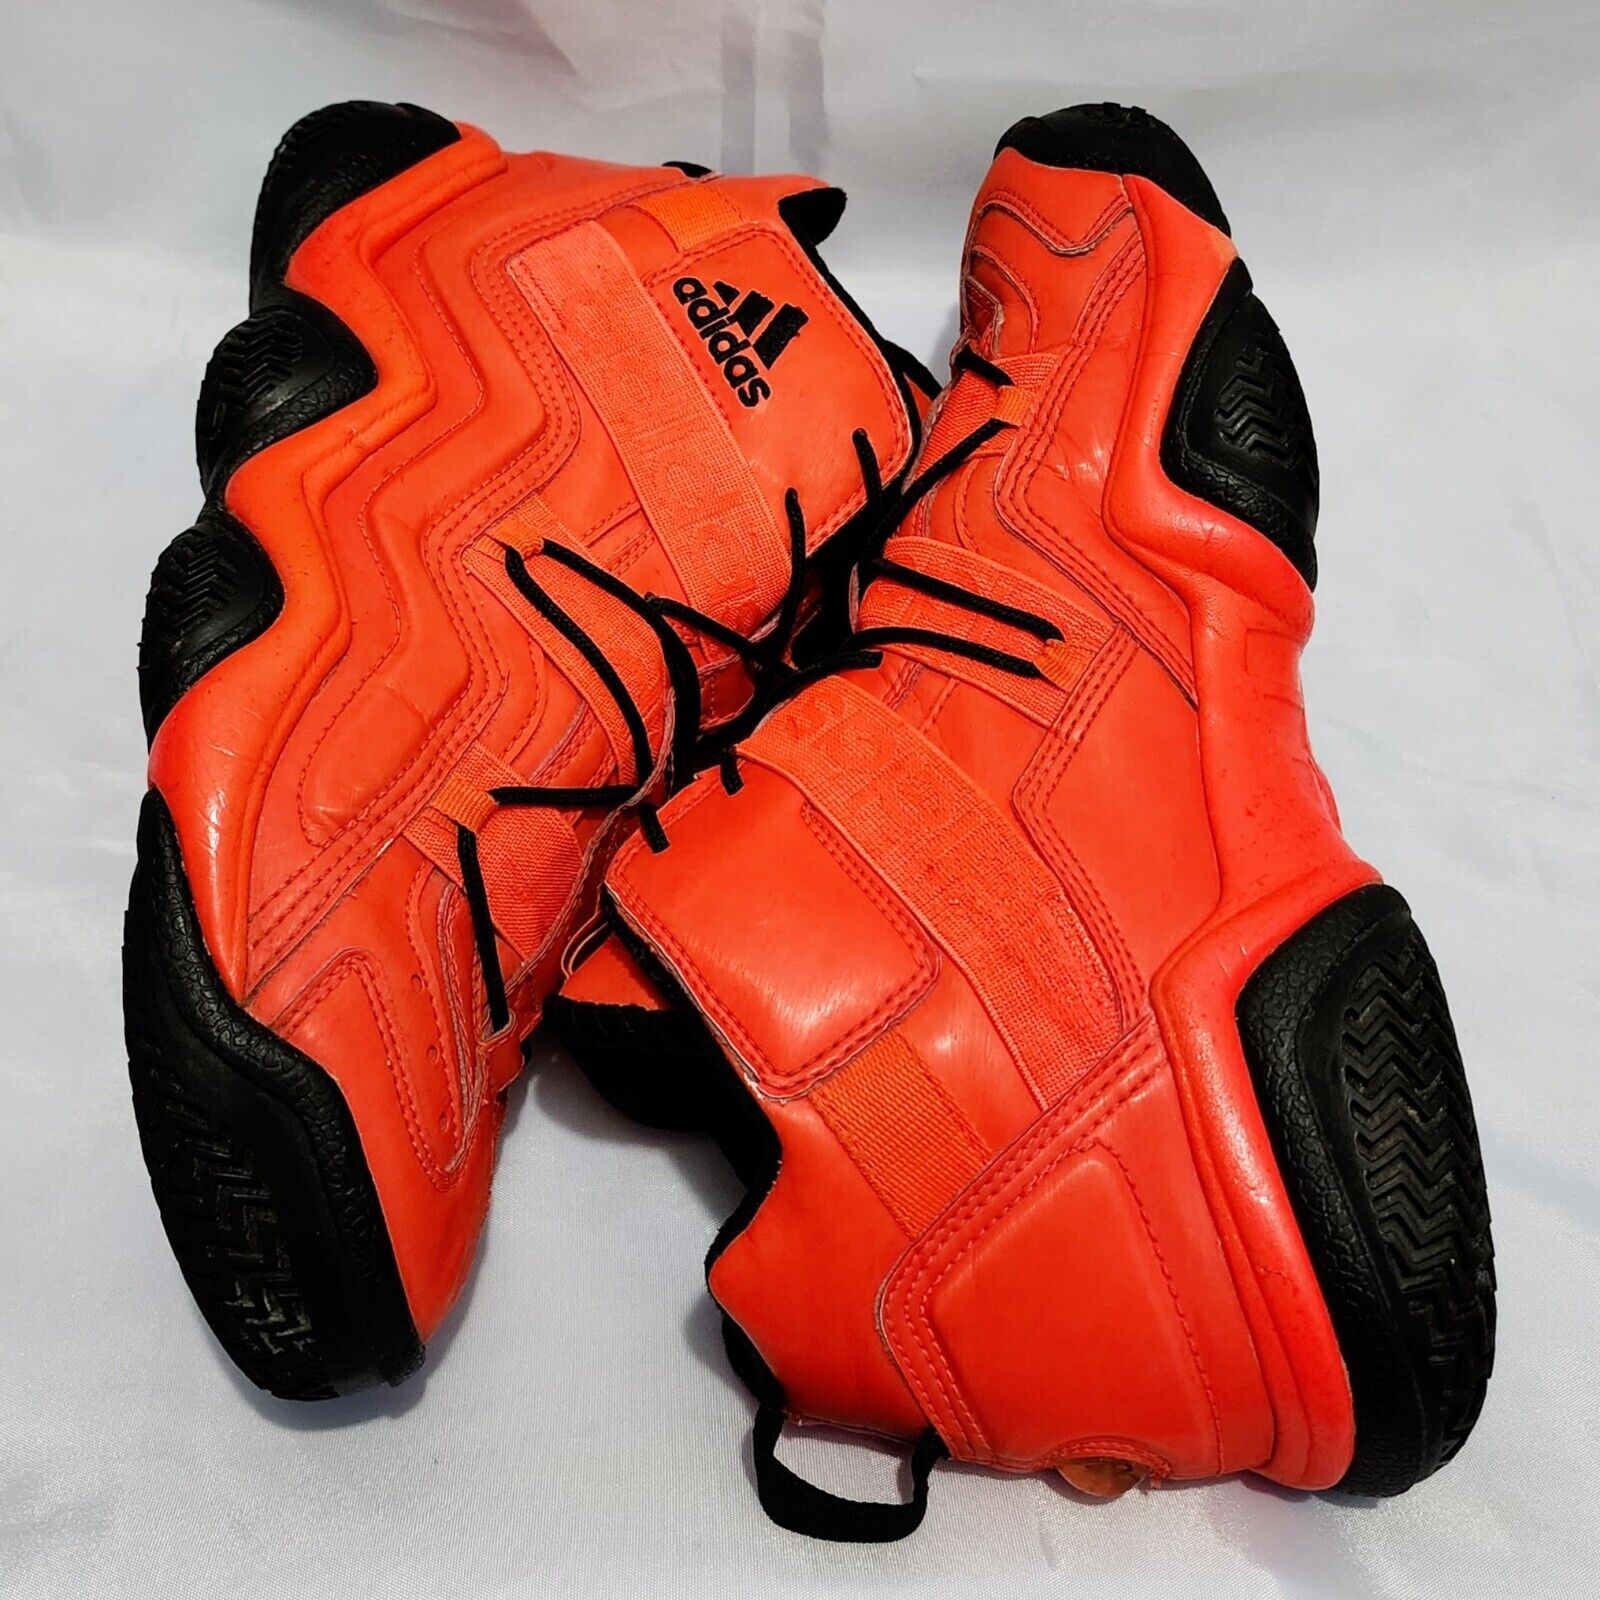 Adidas Top Ten 2000 Infrared Orange LA Edition Art G59157 Men's Size 9.5  RARE!